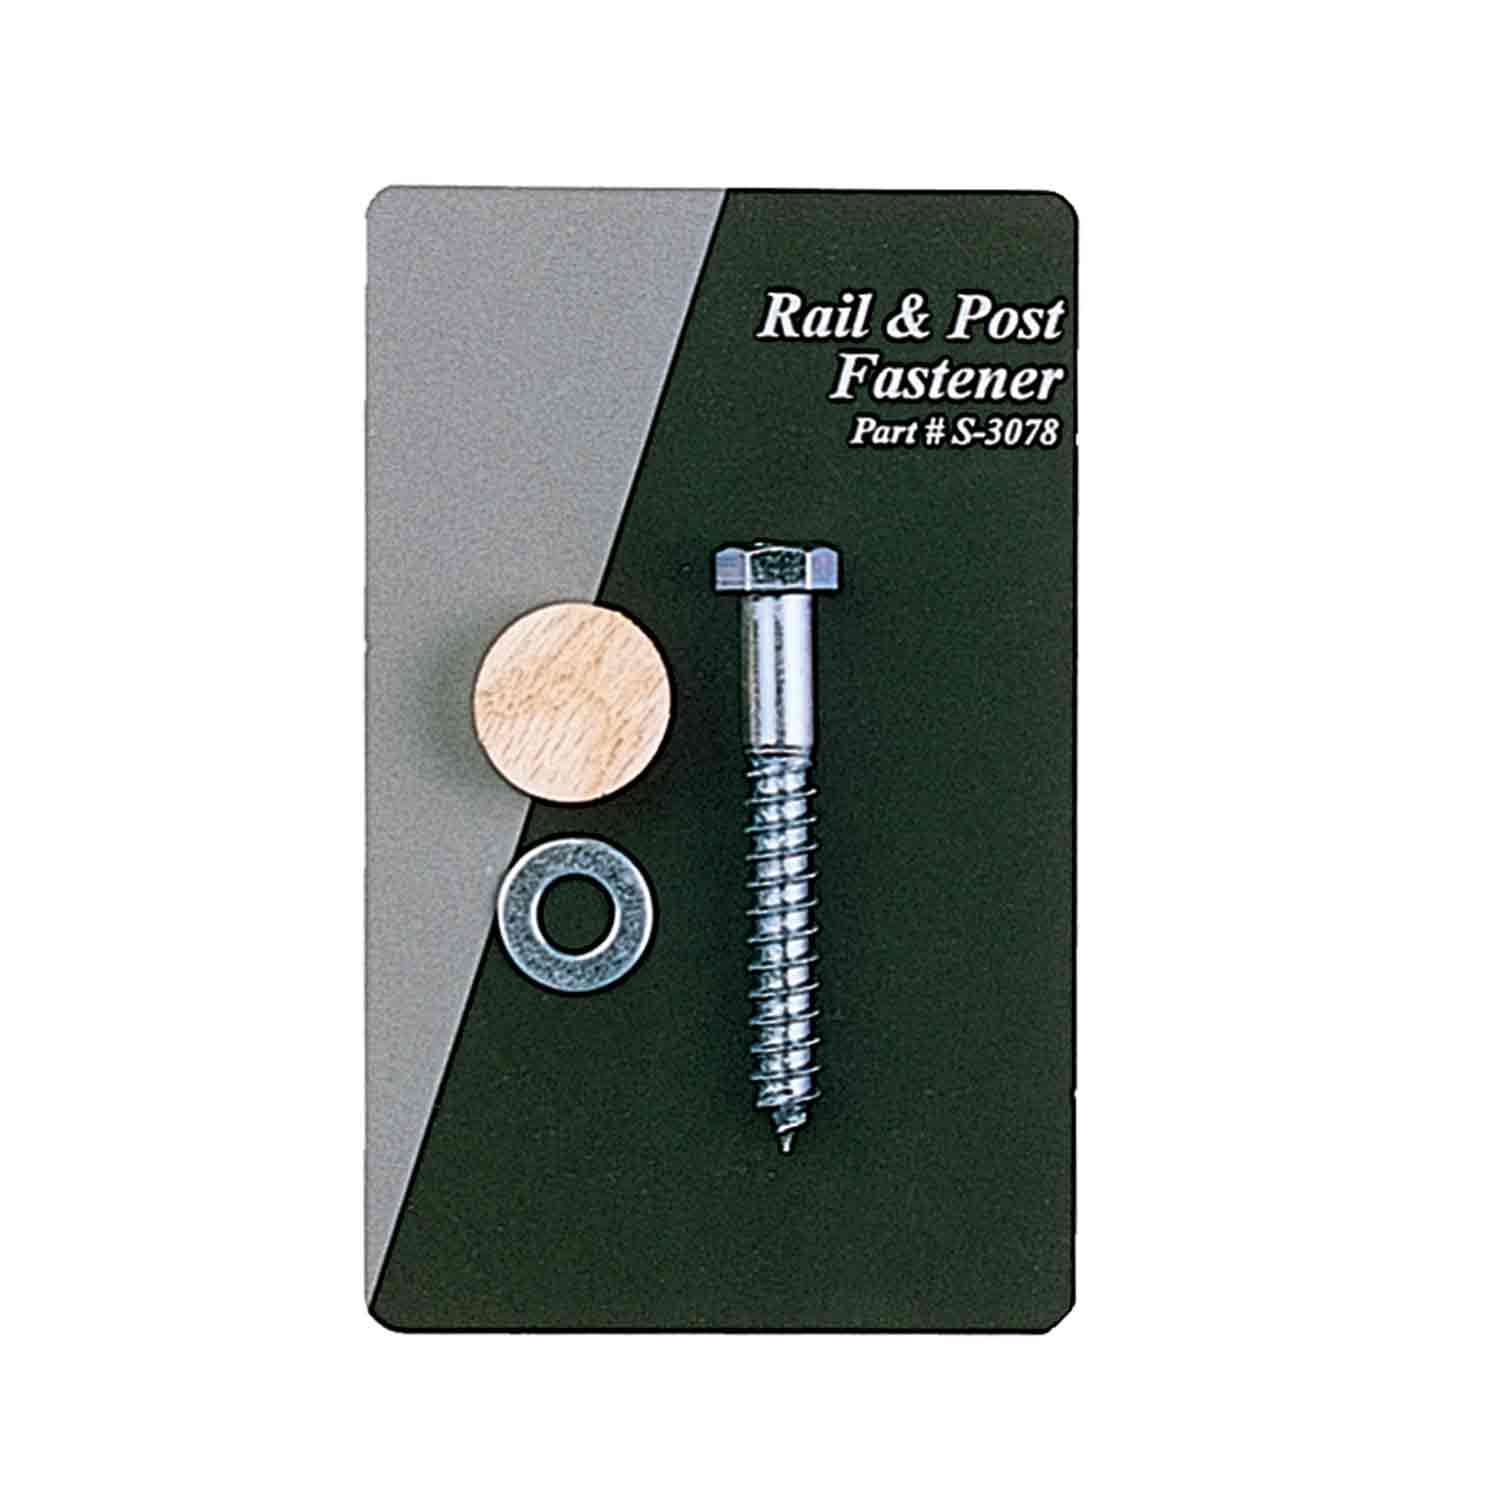 lj-3078 rail and post fastener